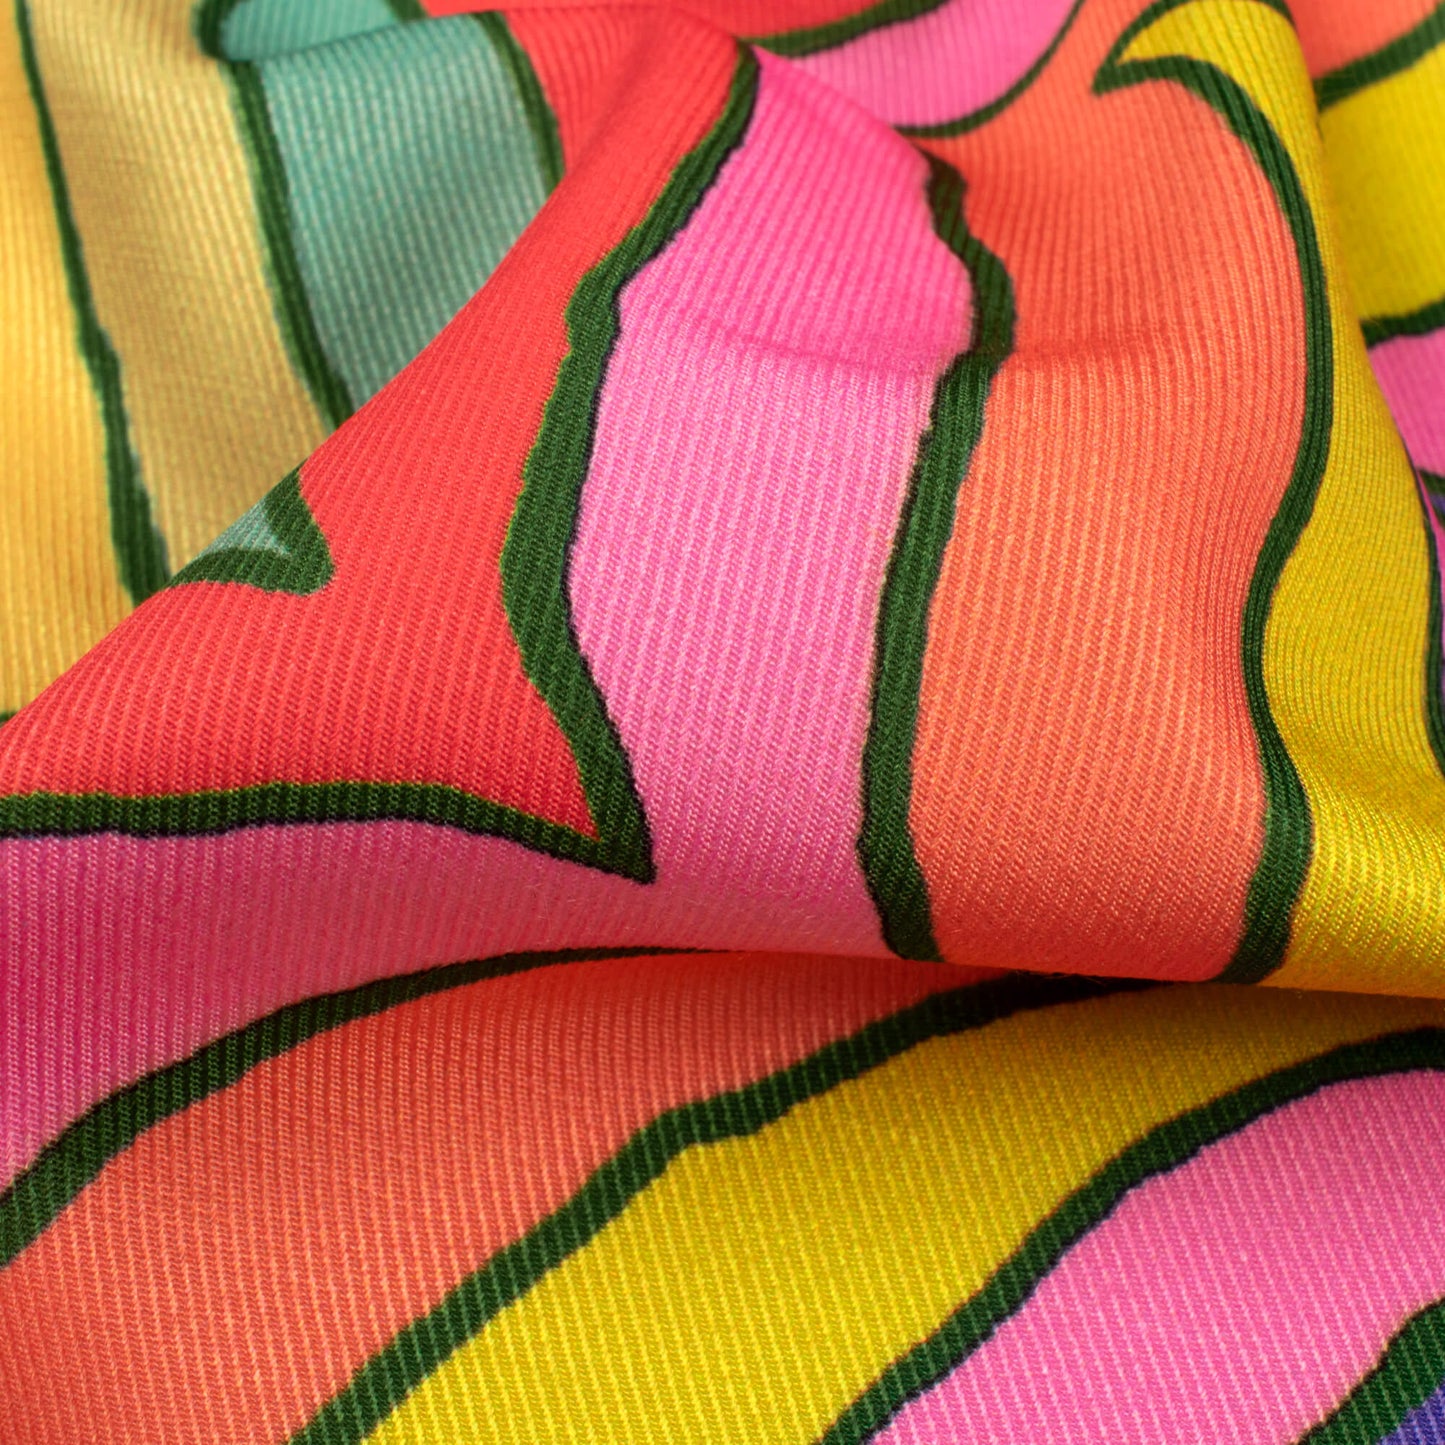 Taffy Pink And Corn Yellow Chevron Pattern Digital Print Twill Fabric (Width 56 Inches)